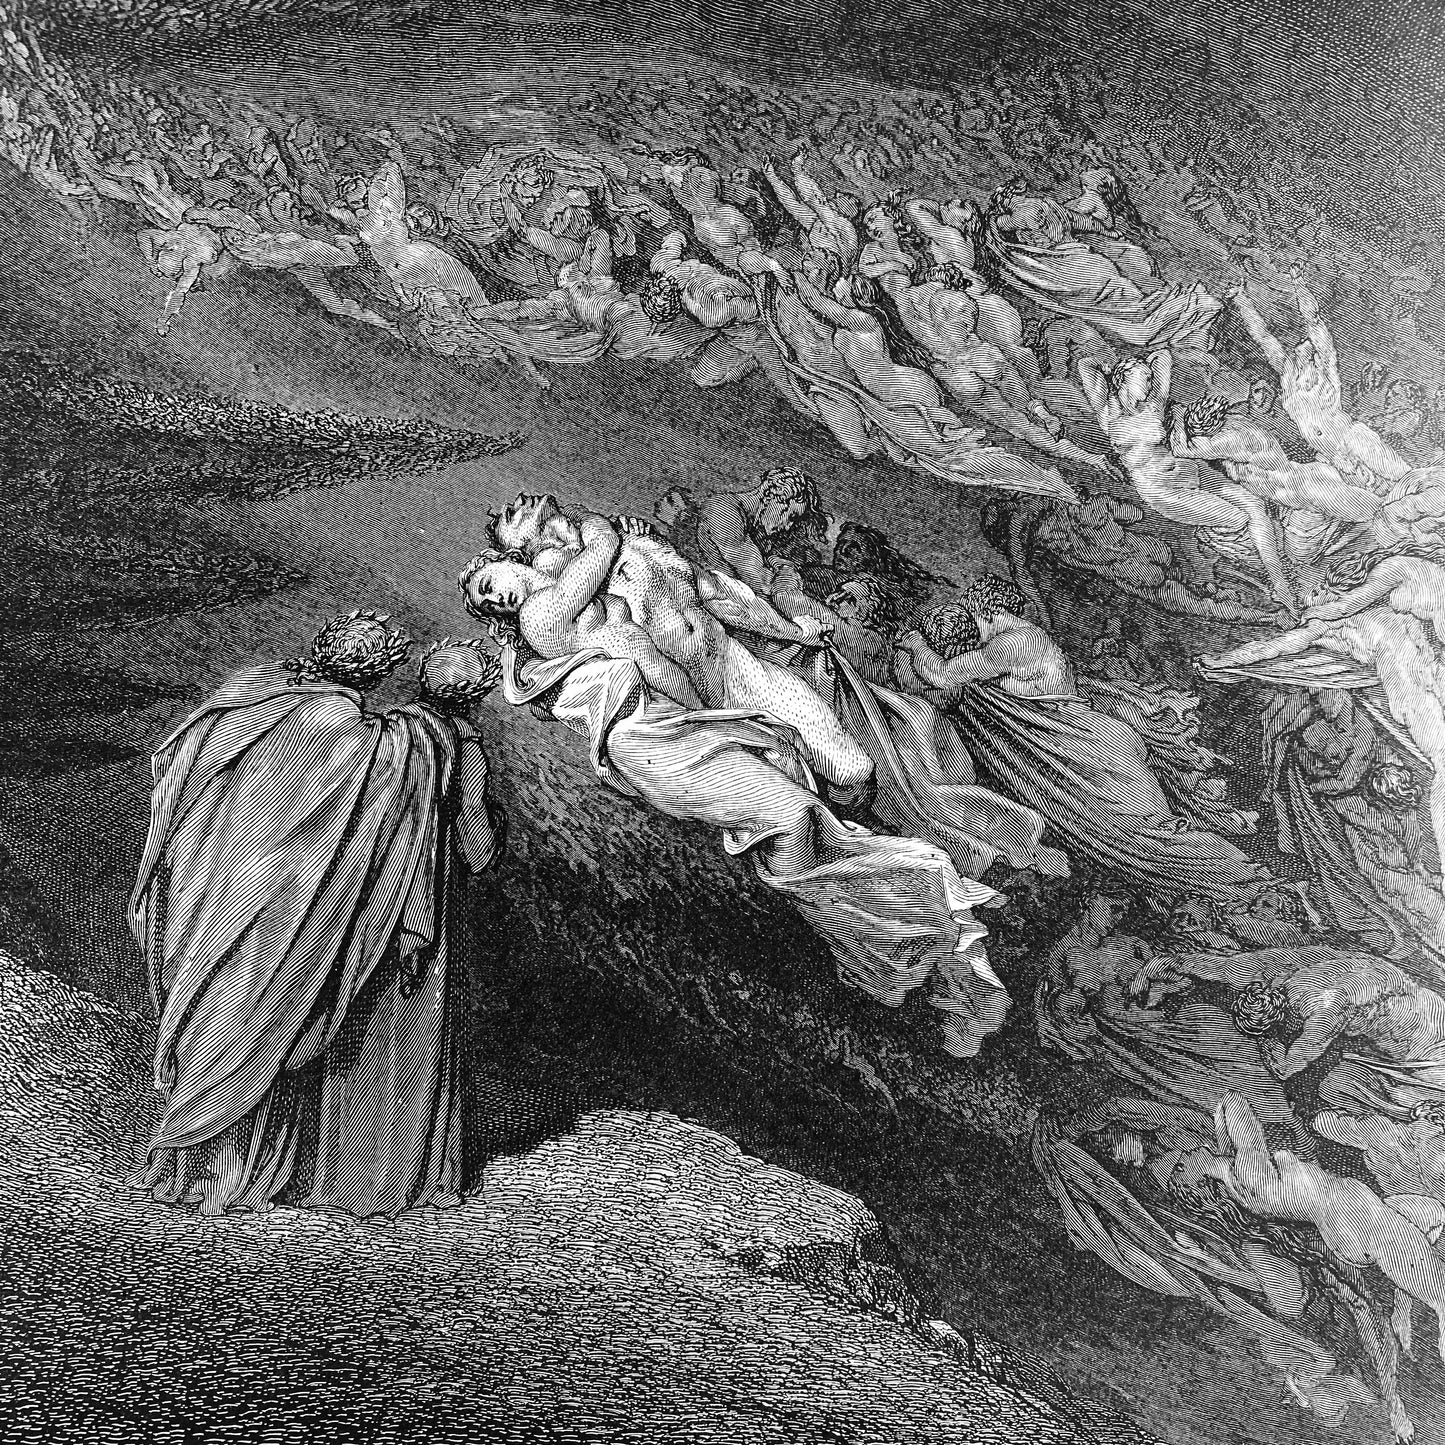 ALIGHIERI, Dante "Inferno" [Cassell & Company, c1900] Illustrated by Gustave Dore